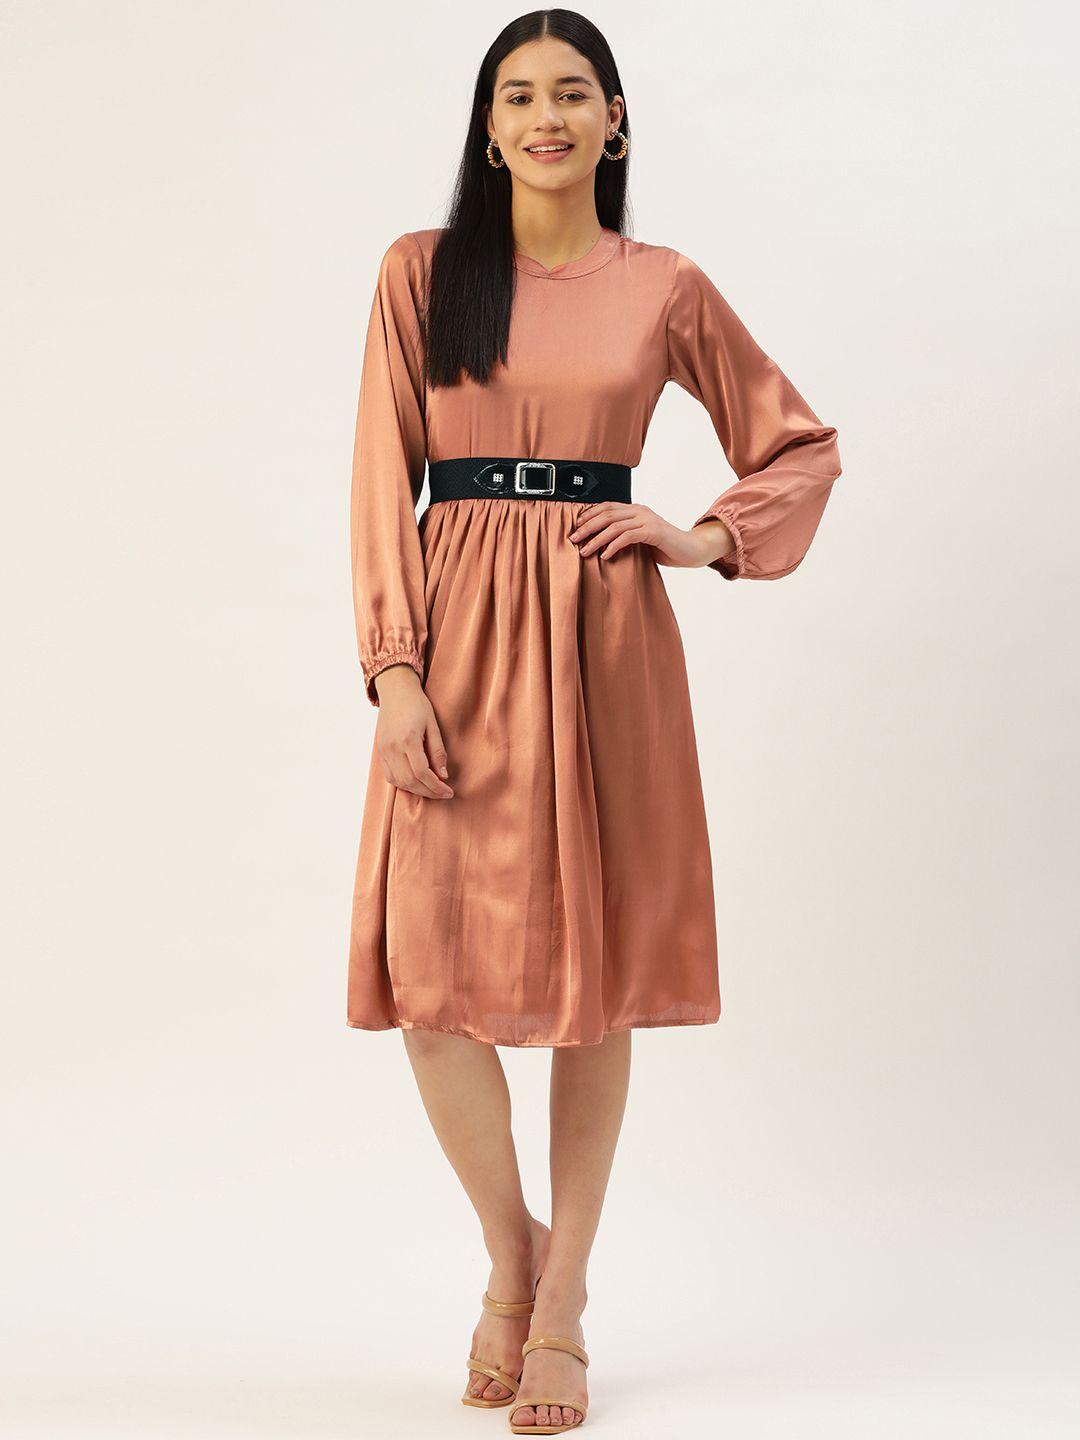 jainish peach-coloured satin dress with belt